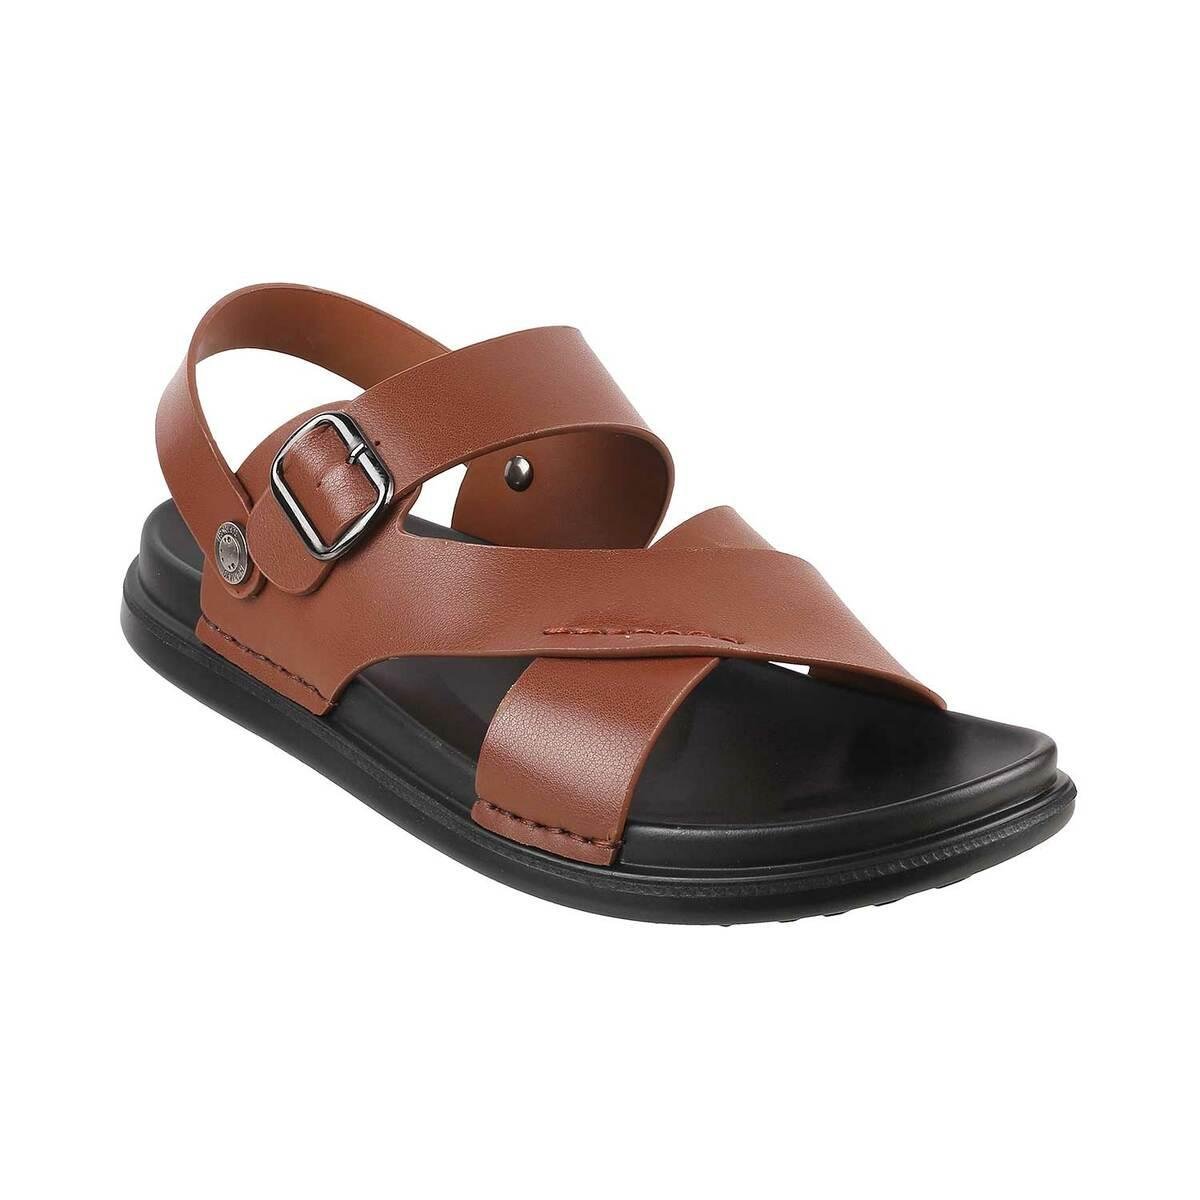 Buy Men Tan Casual Sandals Online | SKU: 60-9945-23-40-Metro Shoes